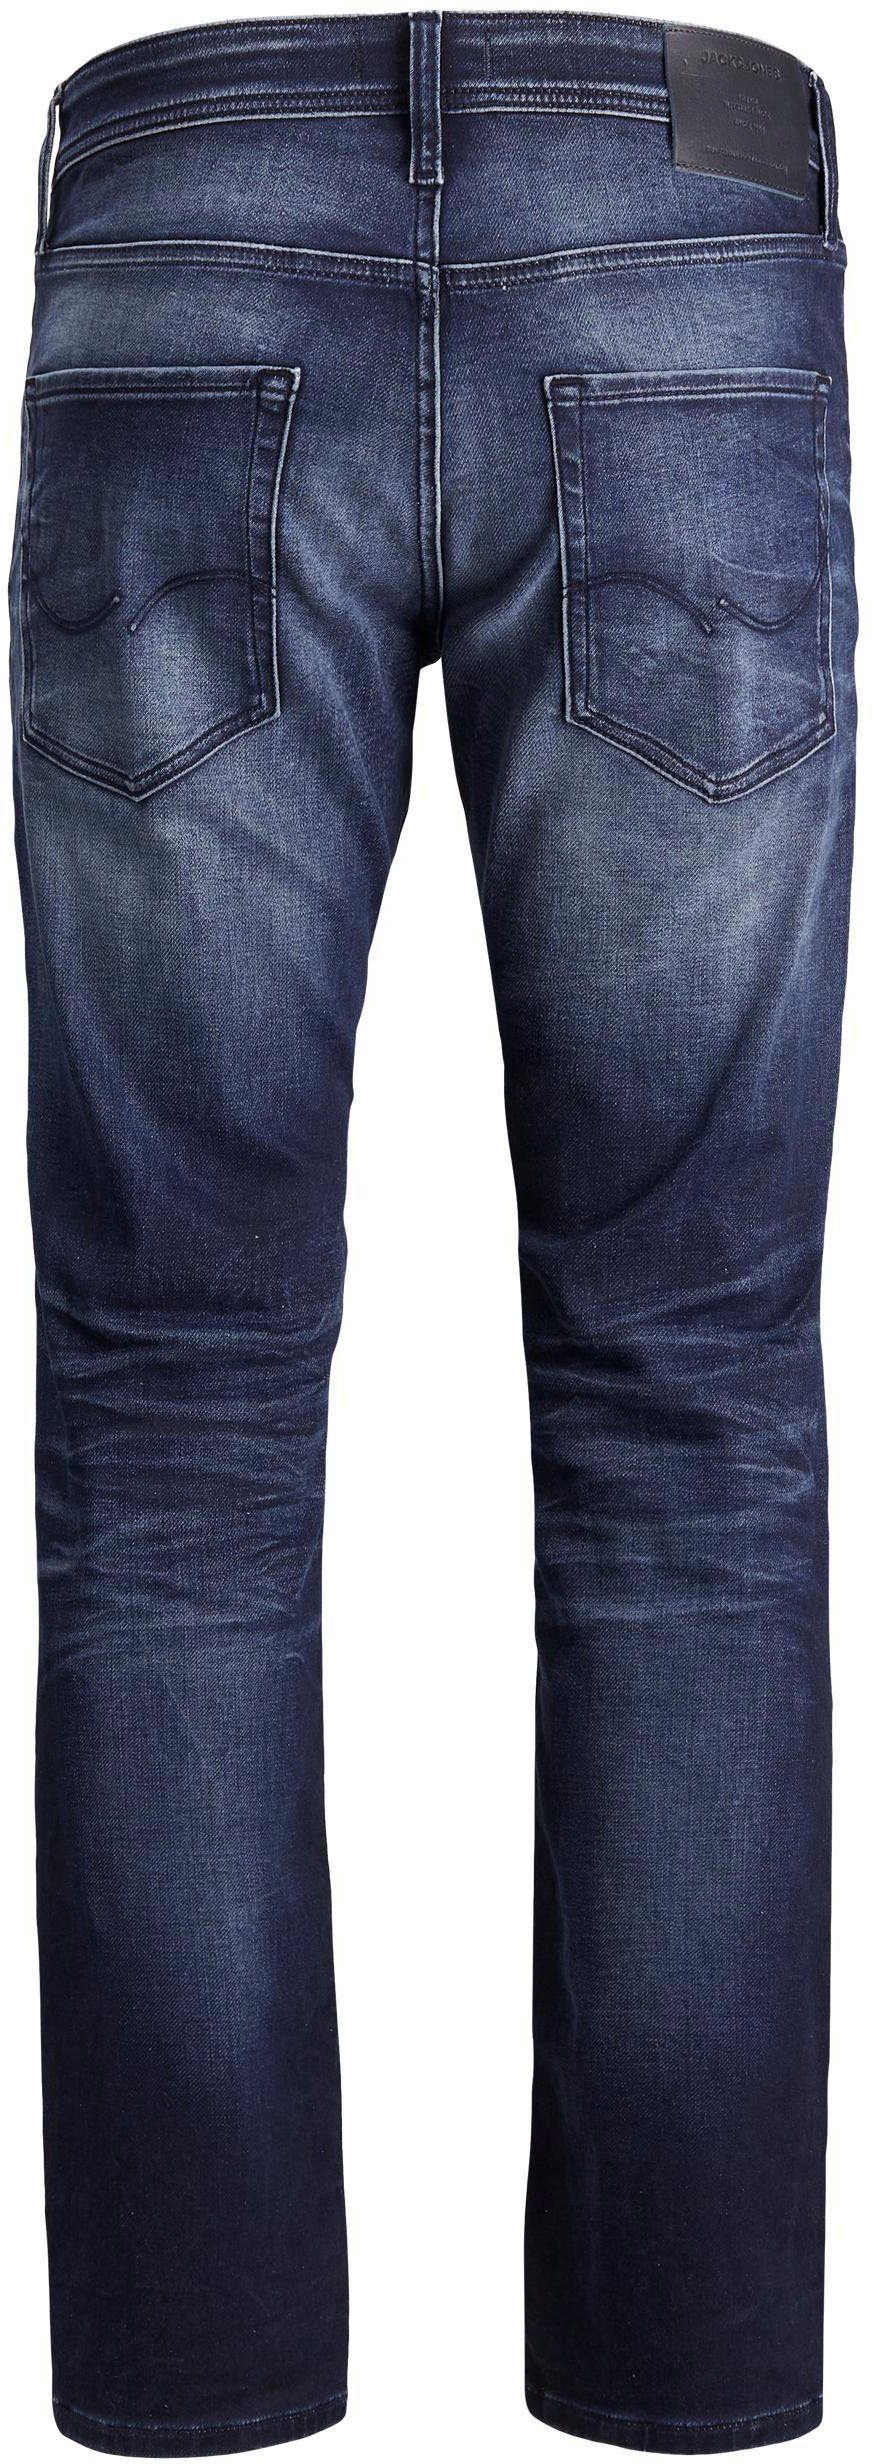 Jack & Comfort-fit-Jeans Mike Jones blue-denim